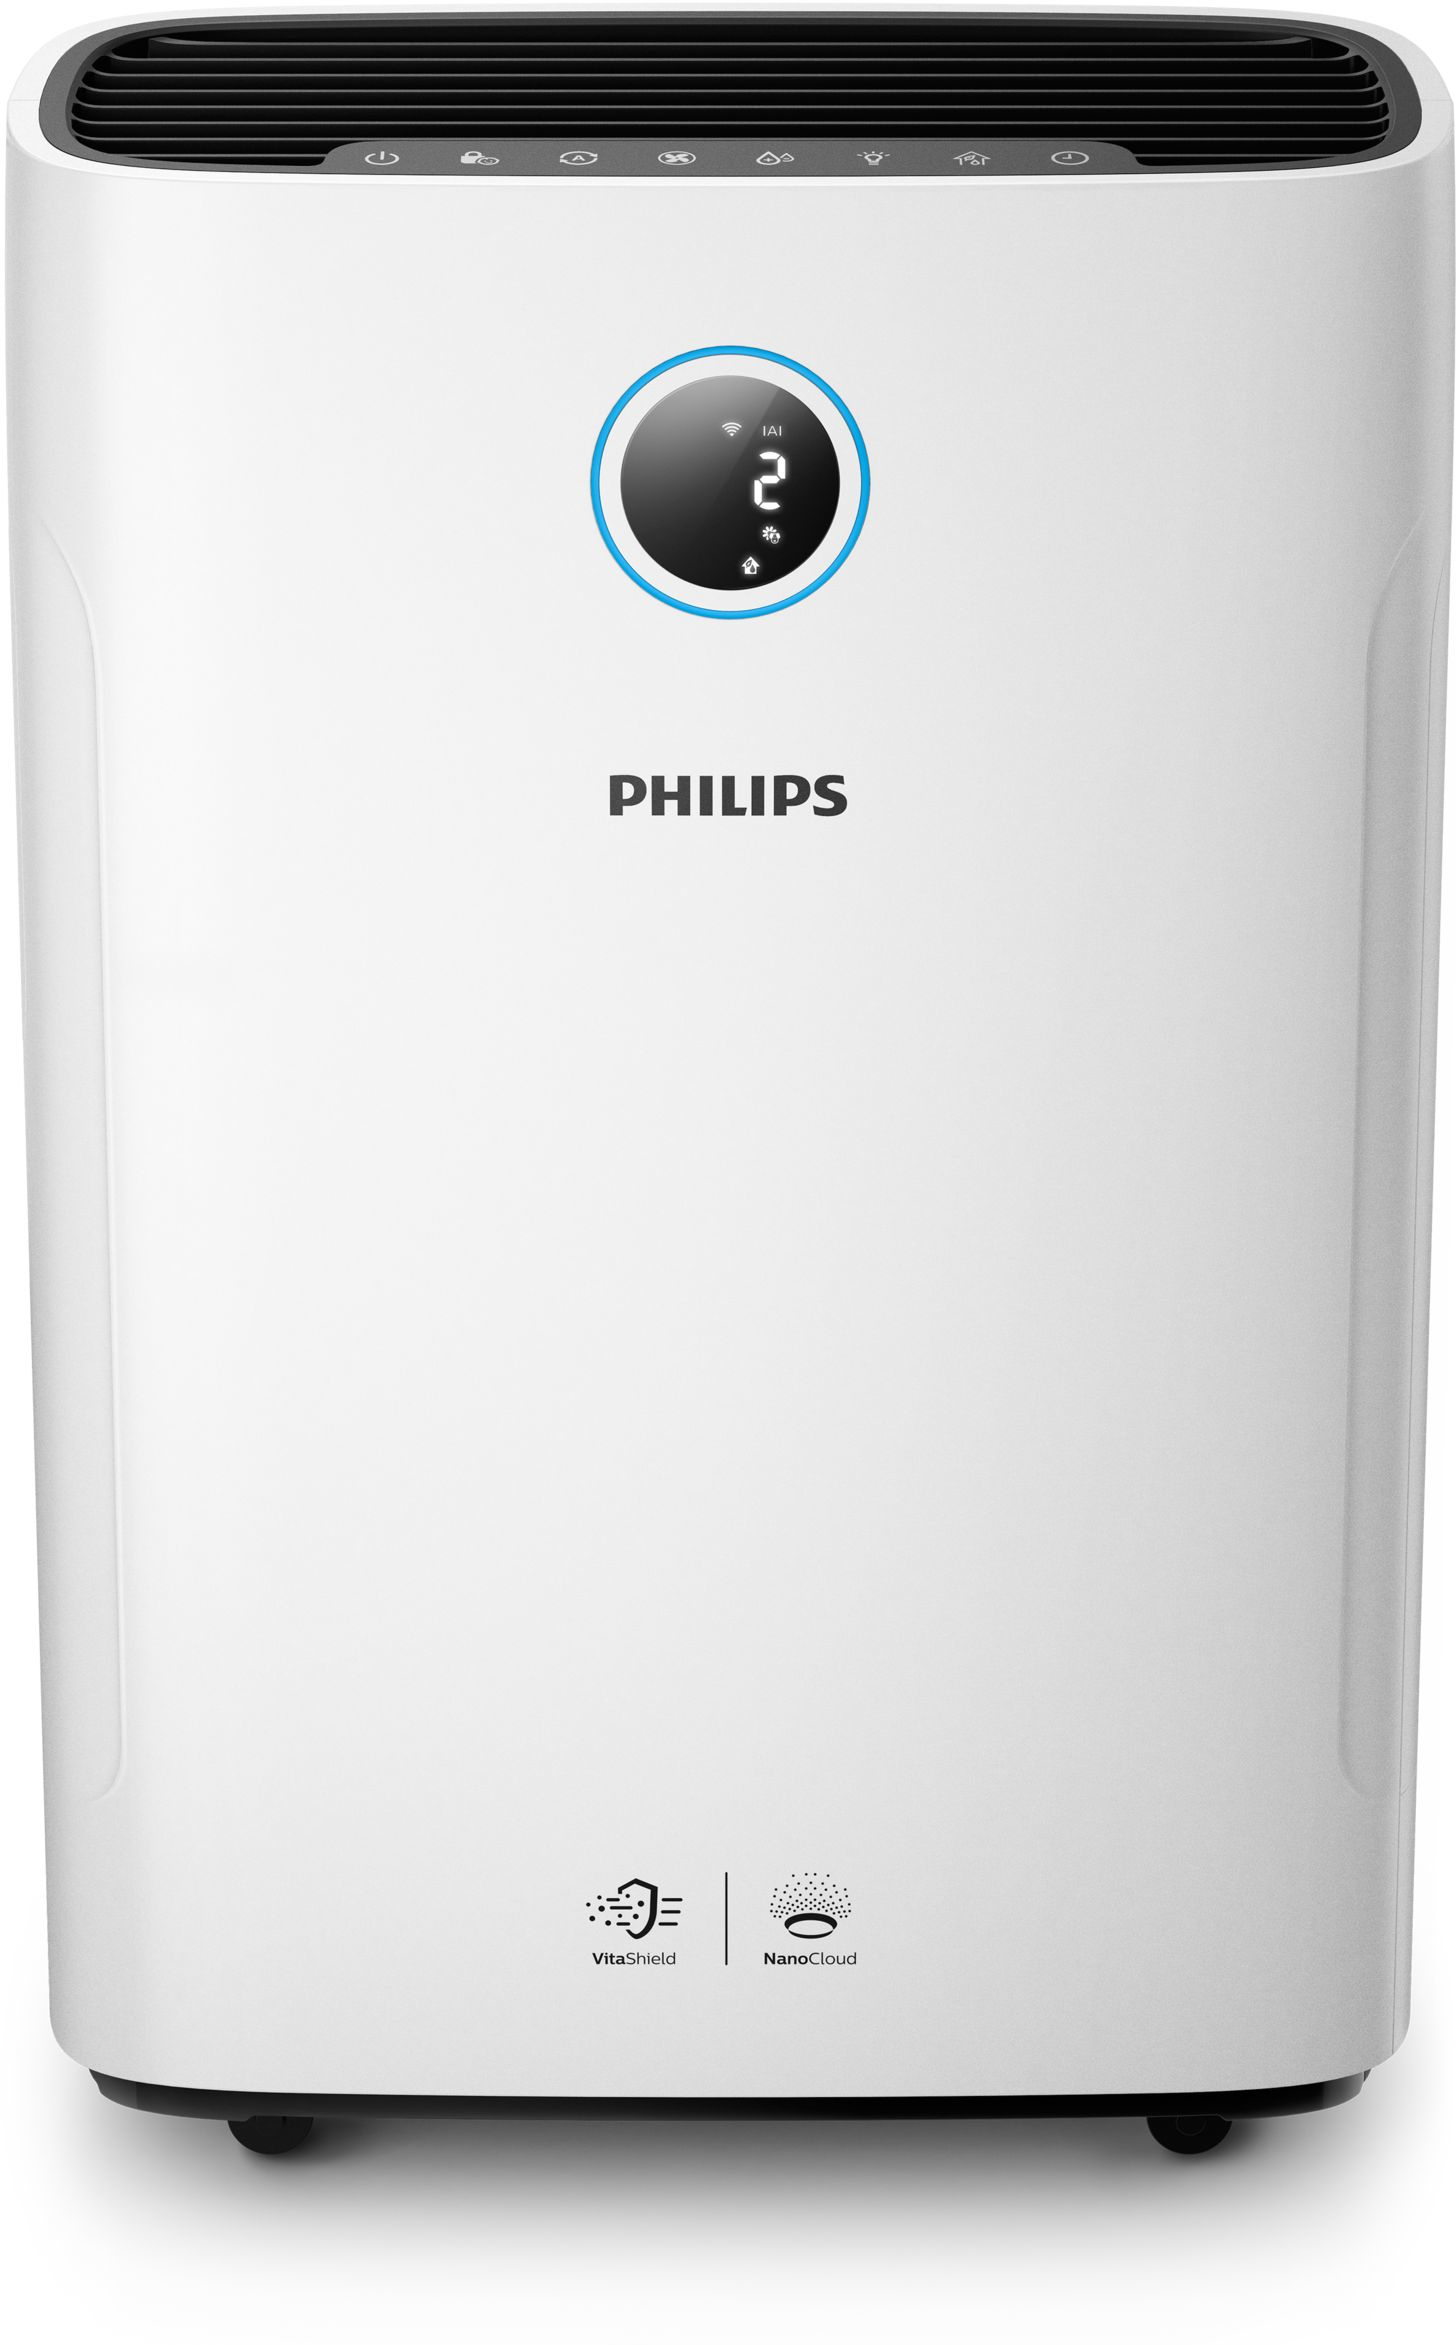 Philips Serie 2000i humidificador y purificador de aire 2 en 1 control por aplicación elimina polvo estancias 65m² 4 velocidades modo ac272910